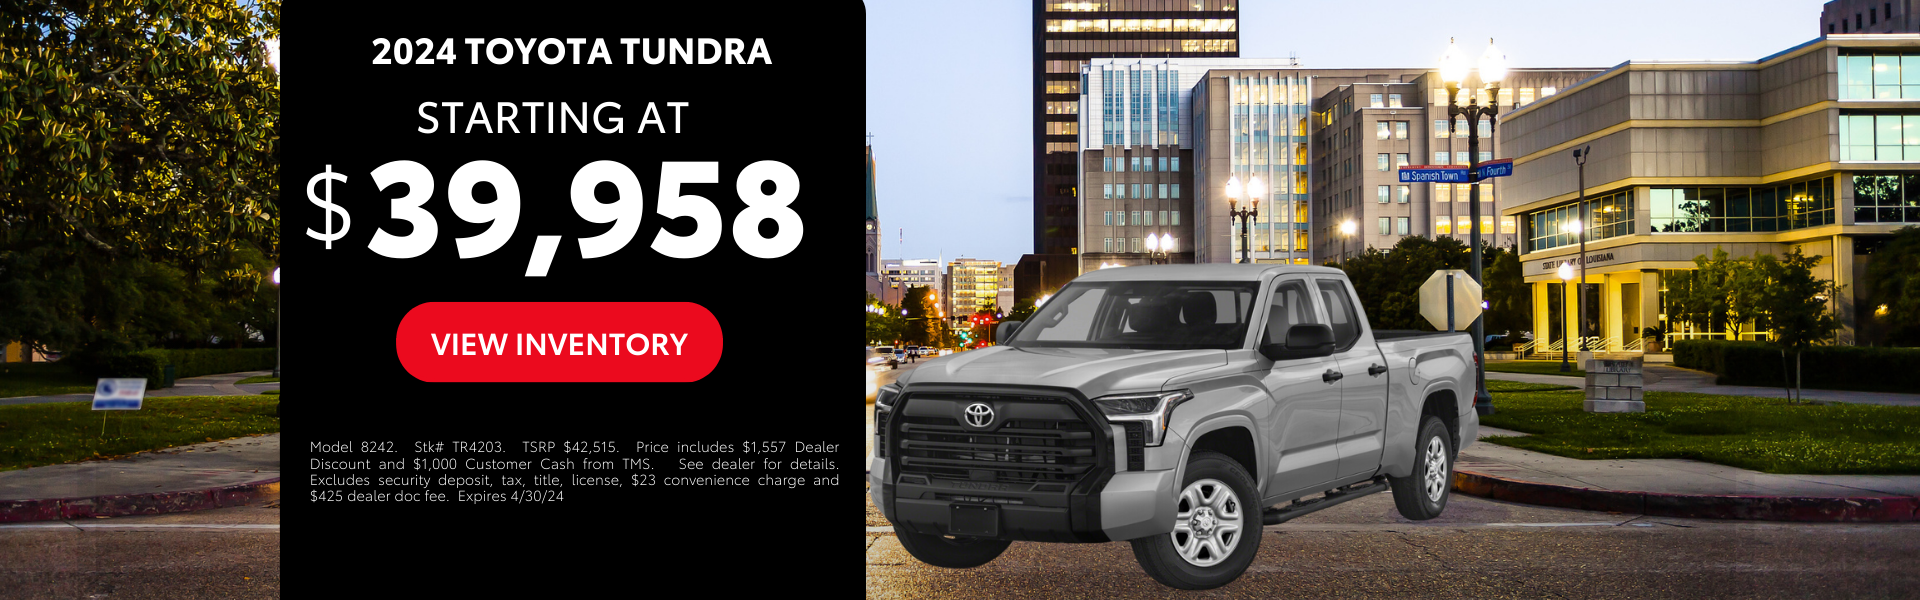 2024 Toyota Tundra Offers